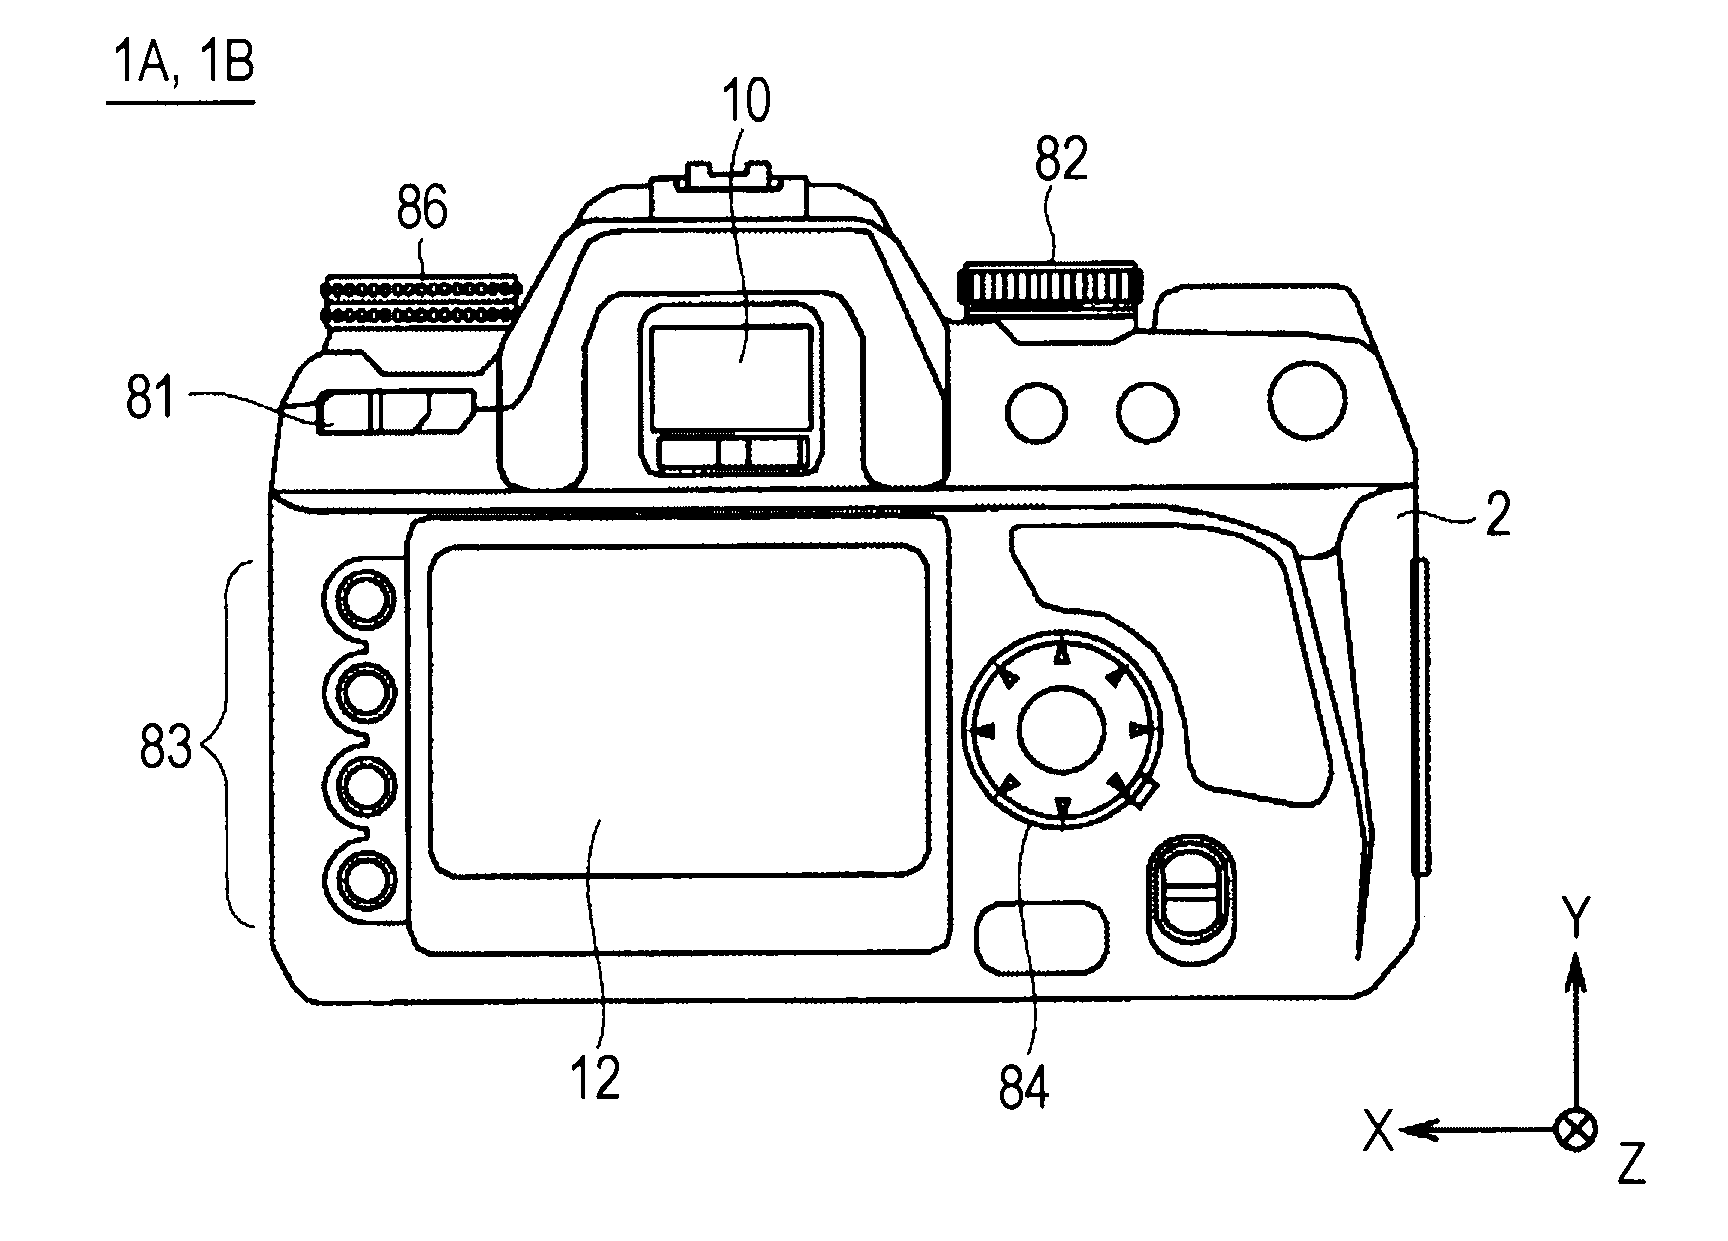 Image pickup apparatus